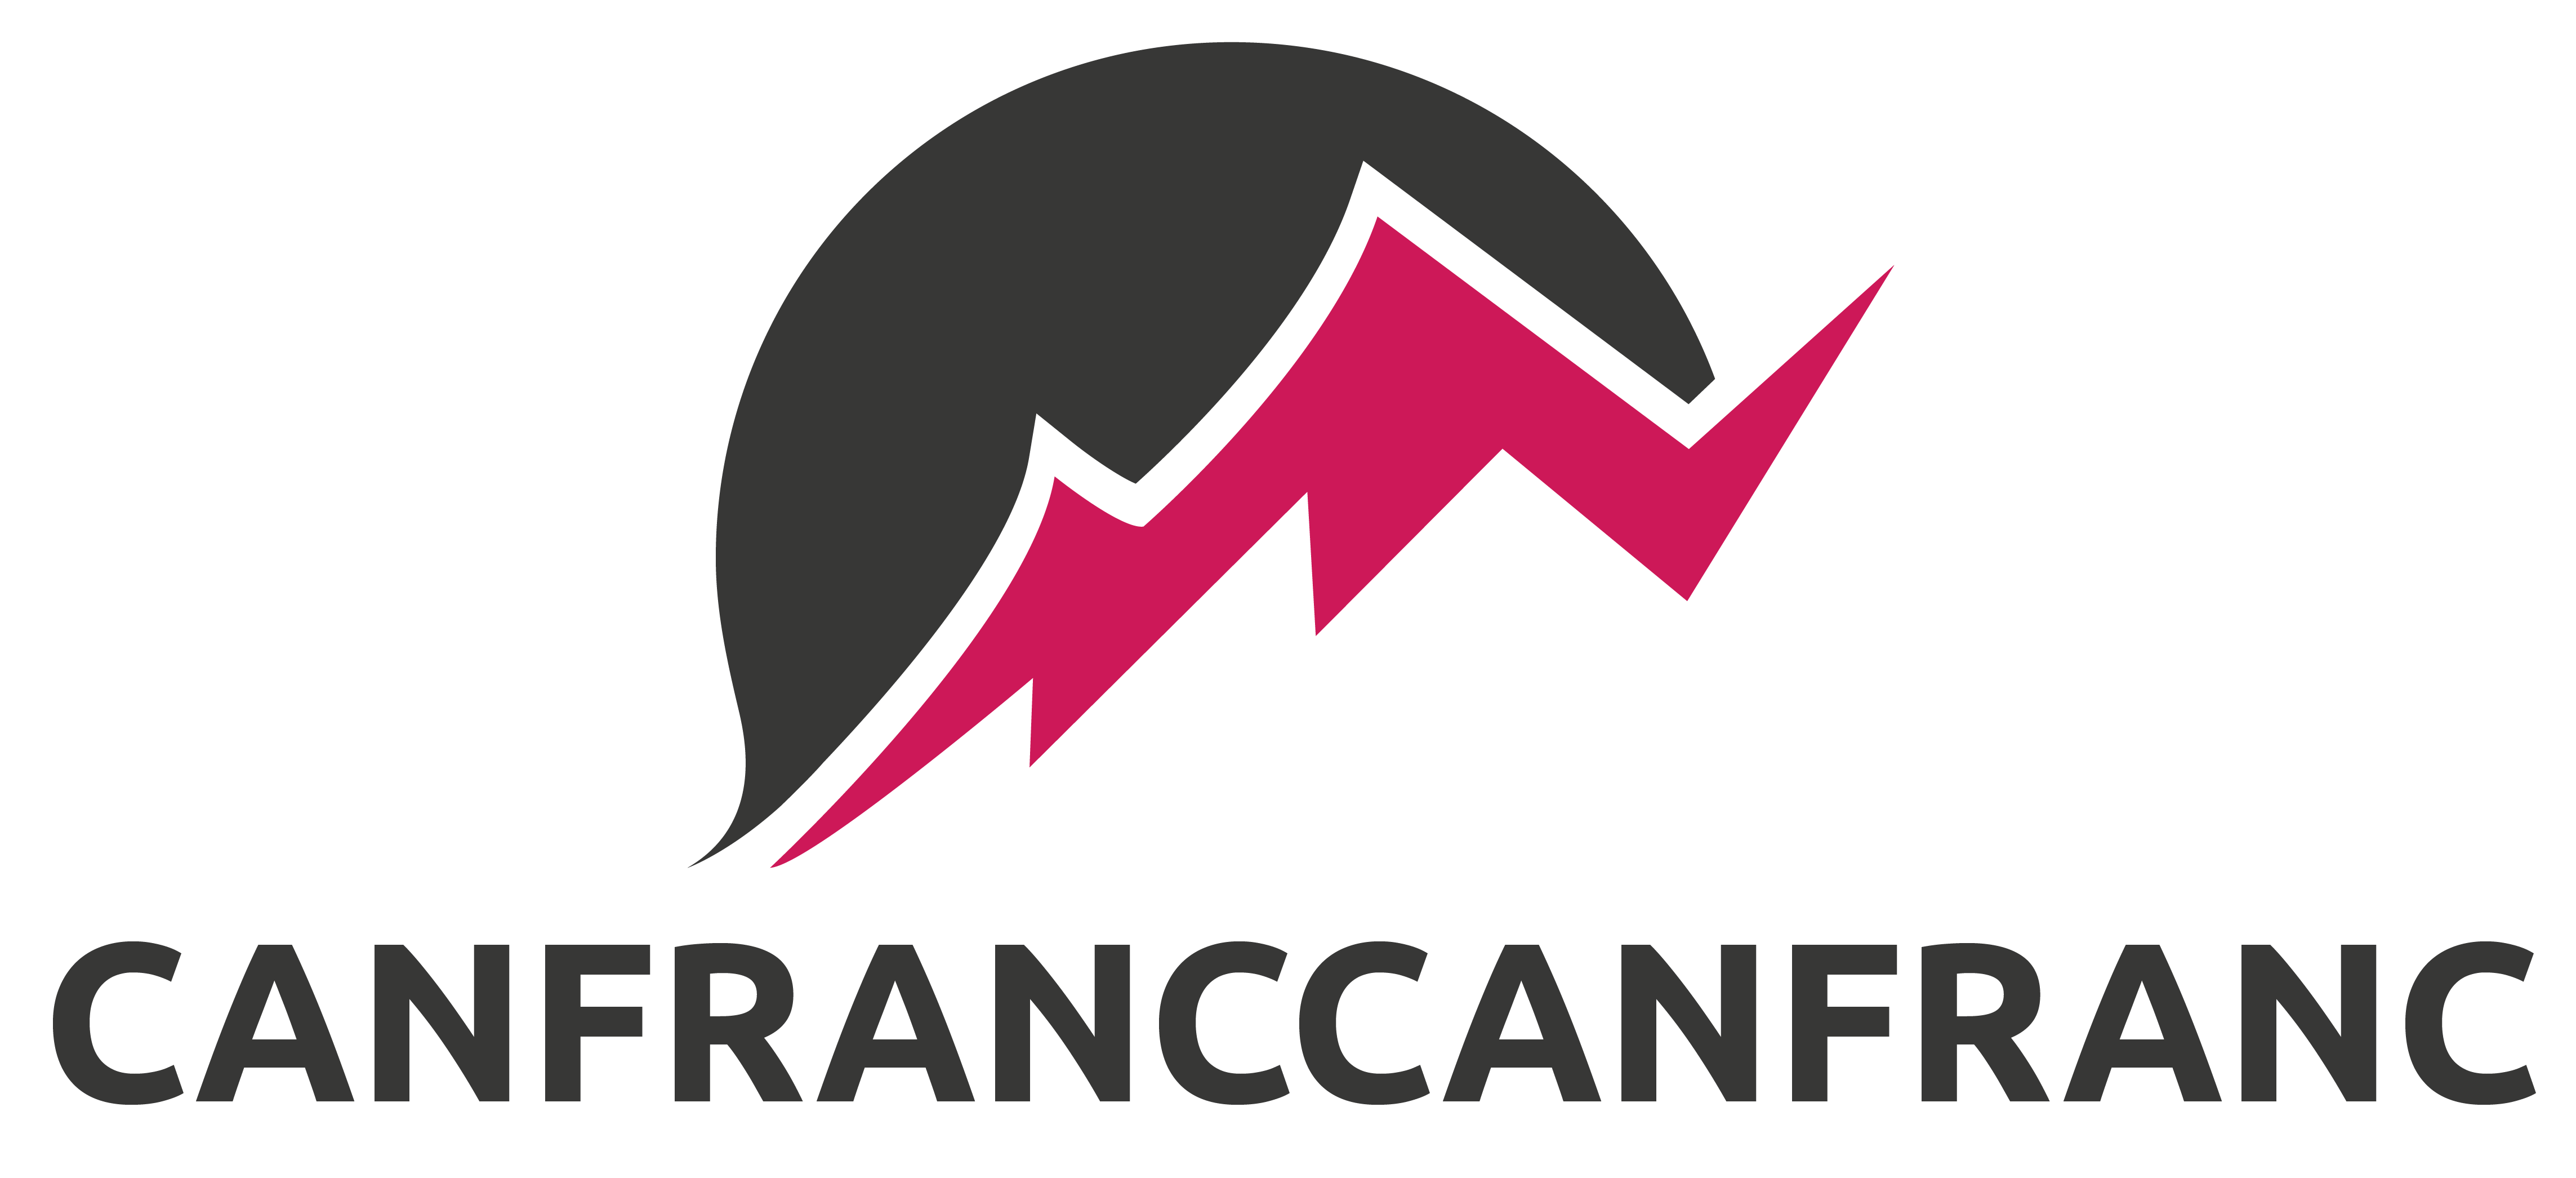 logotipo canfranccanfranc